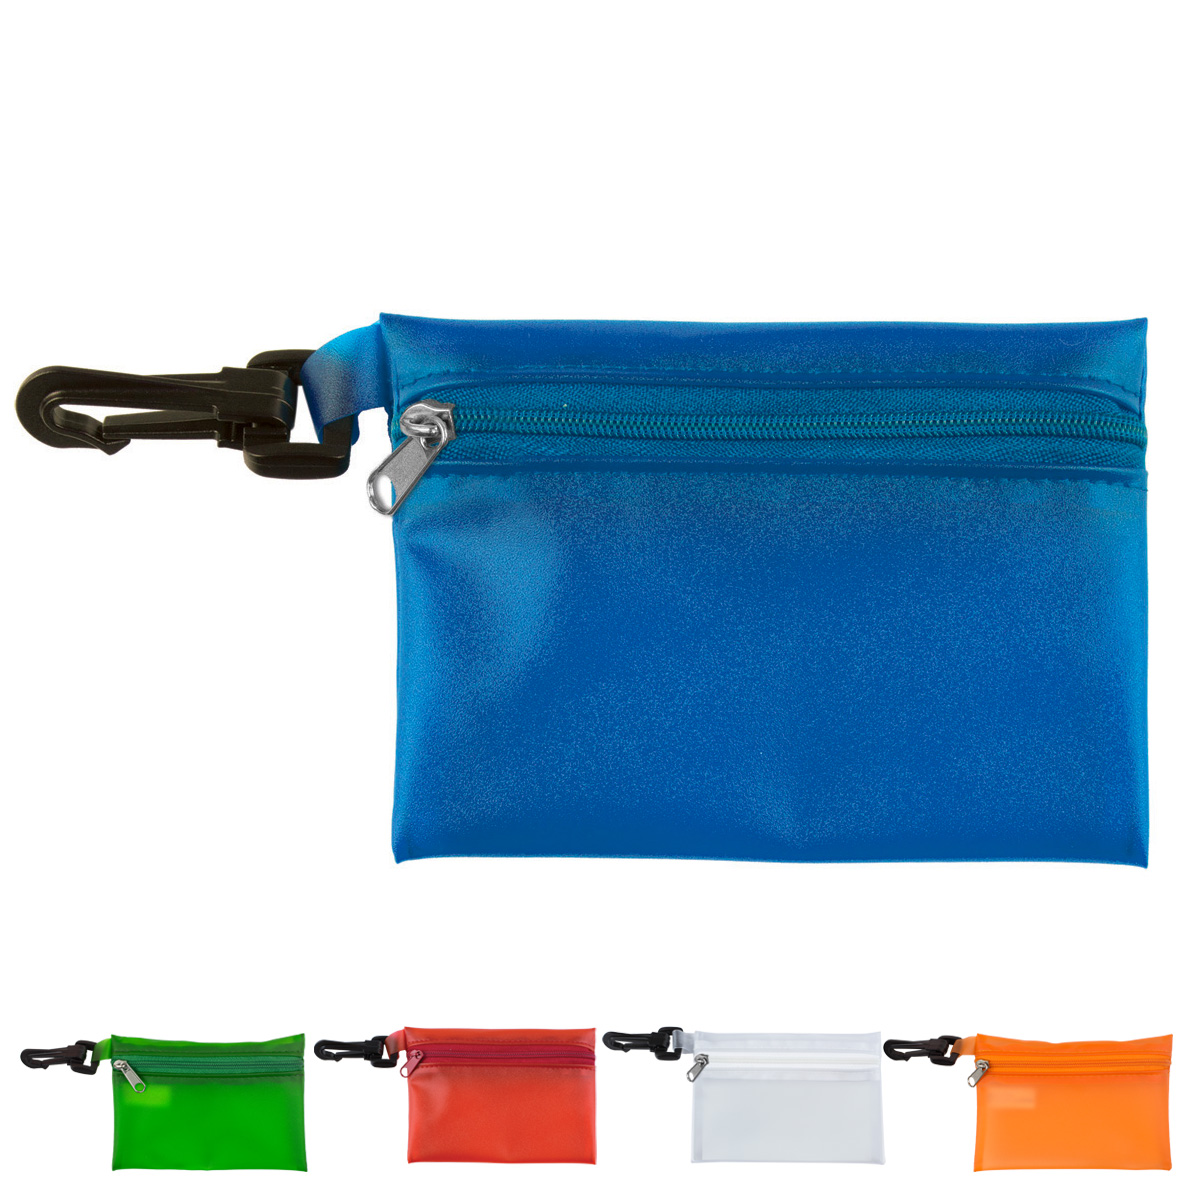 4-7/8 W x 3-1/8" H - “Bali” Translucent Zipper Storage Pouch with Plastic Hook